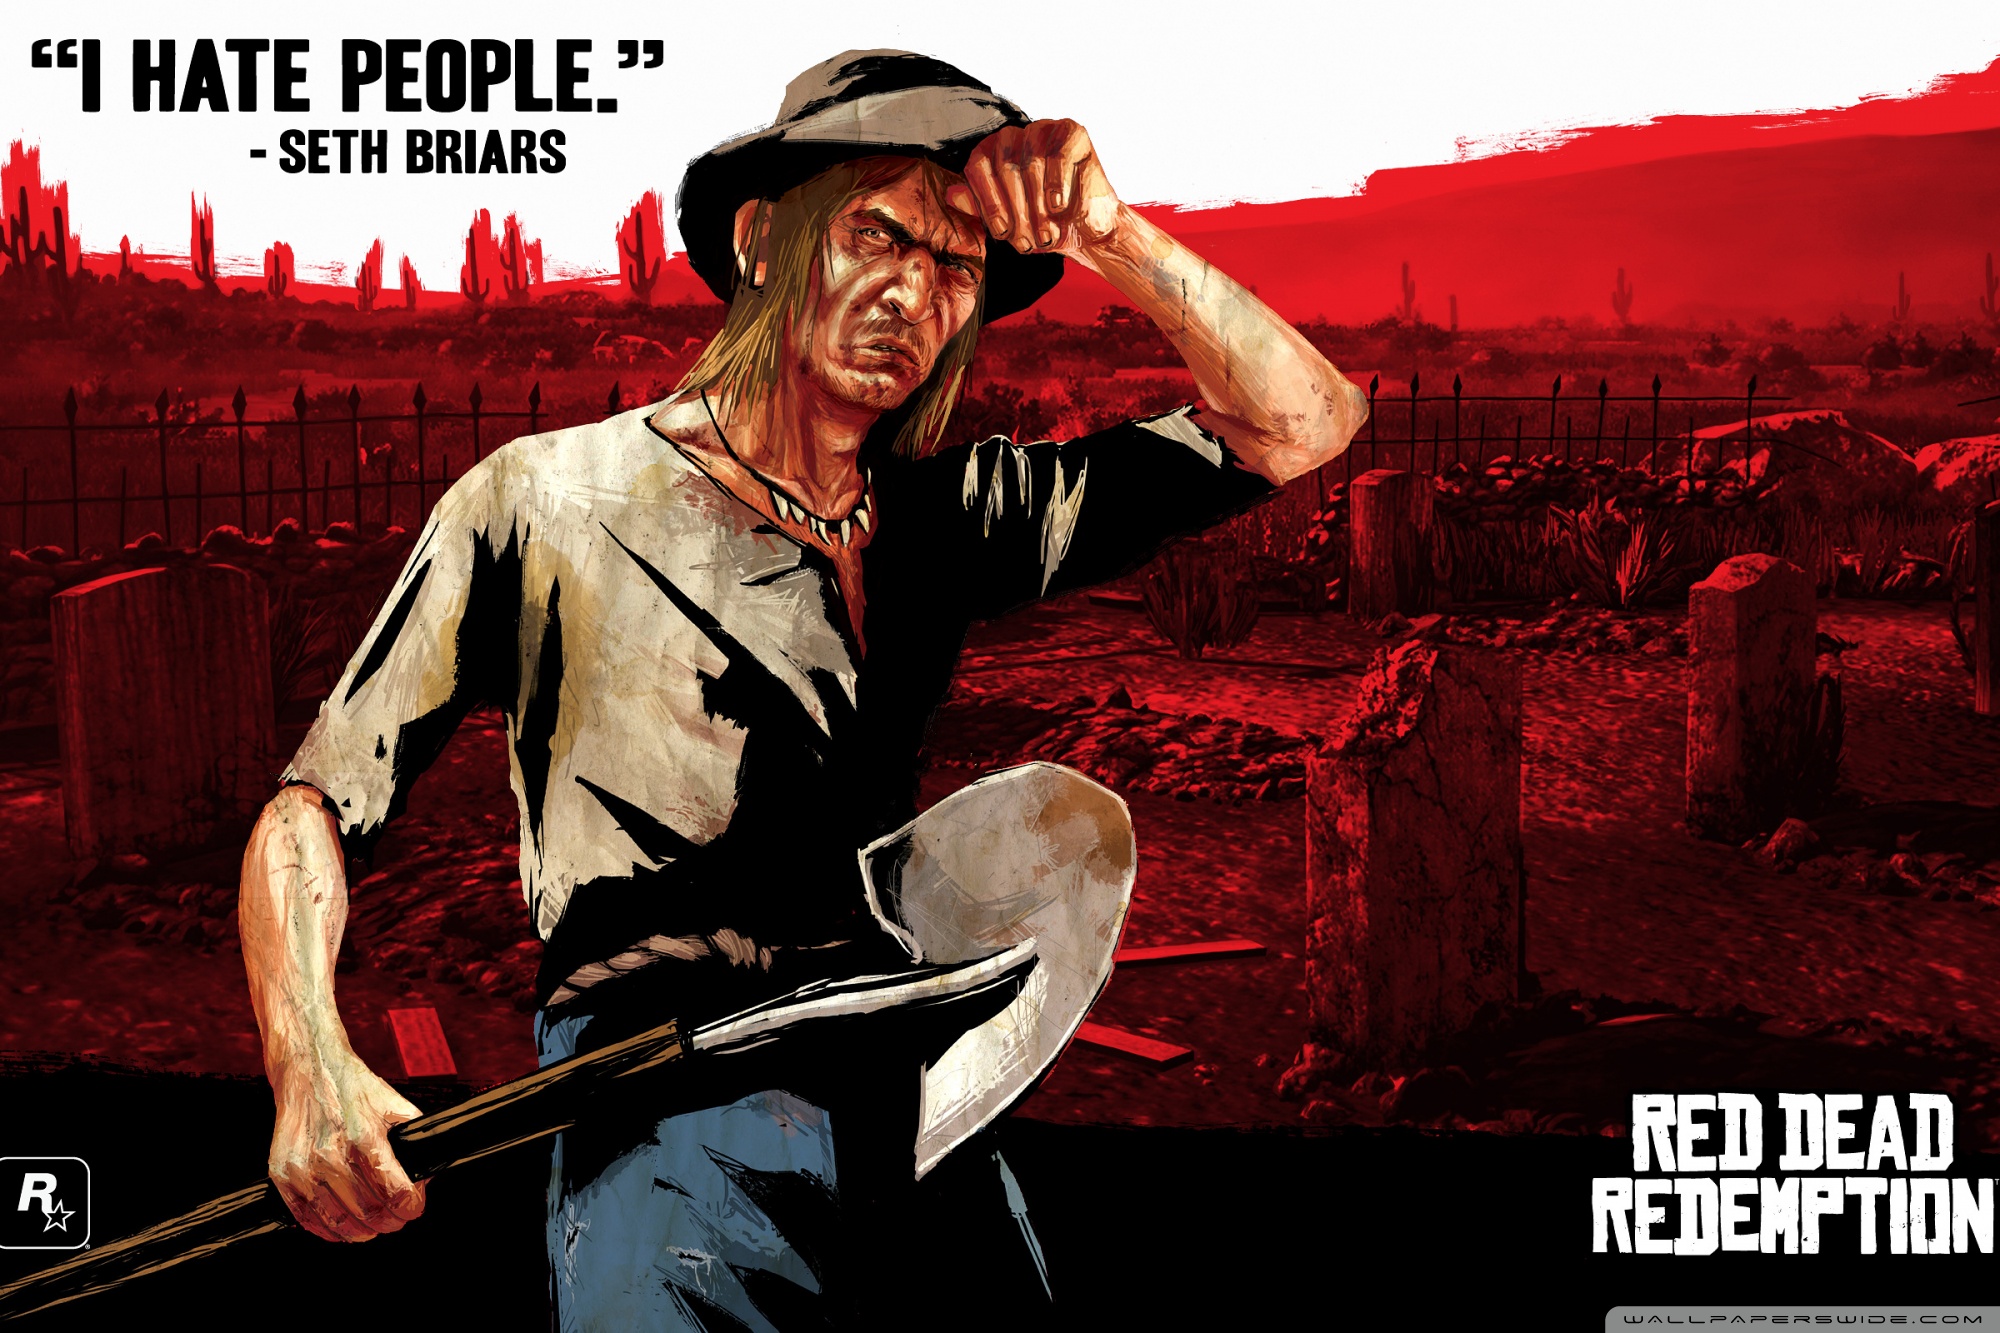 Red Dead Redemption Desktop Wallpaper, 3